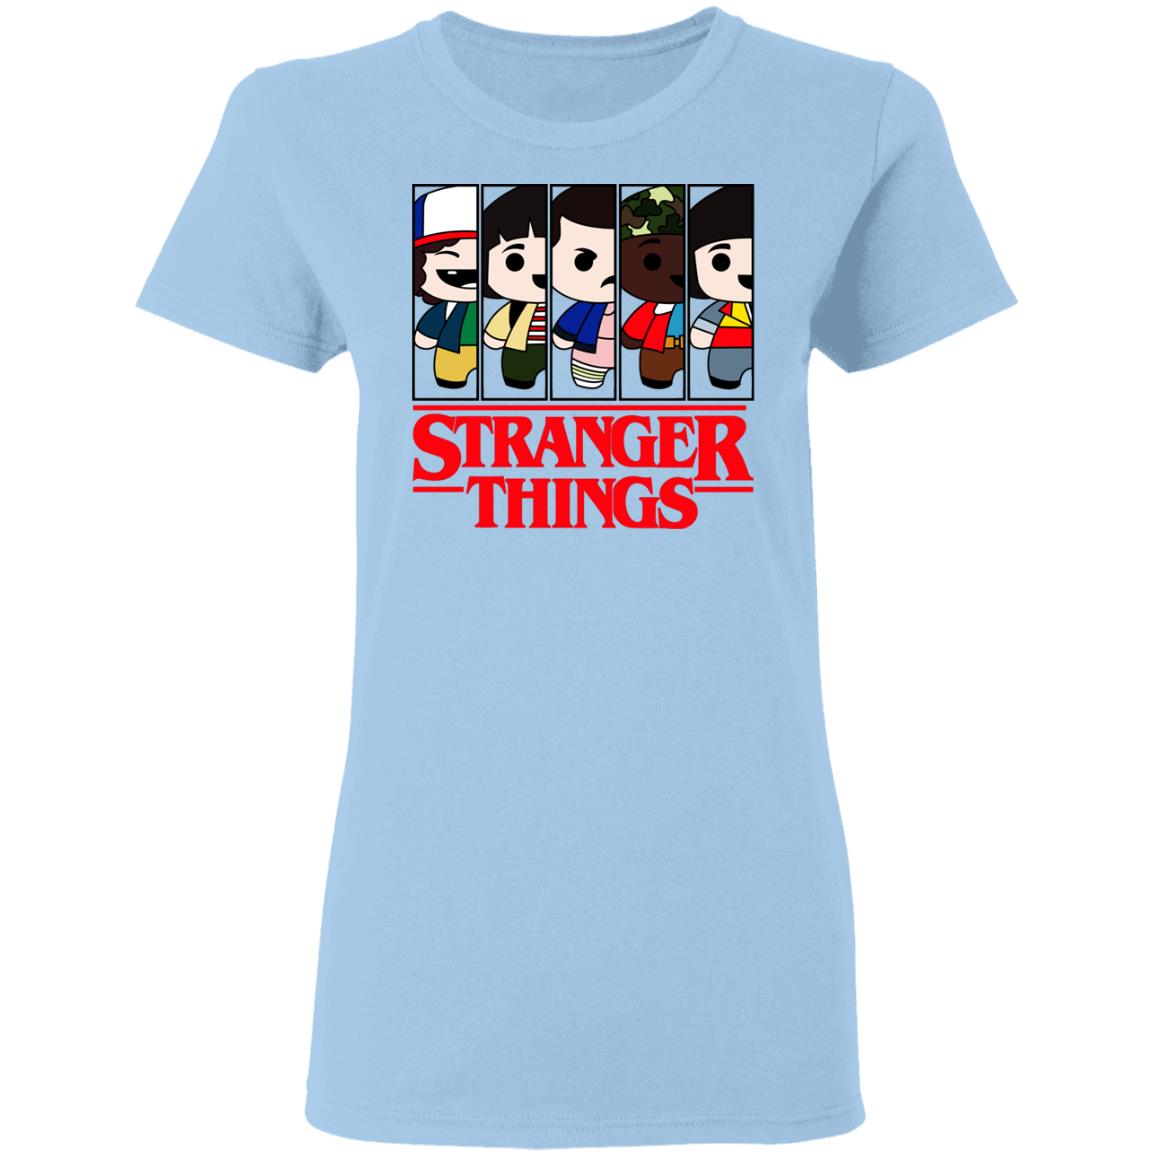 Stranger Things Cartoon Pattern T-shirt  Unisex Top Tee 